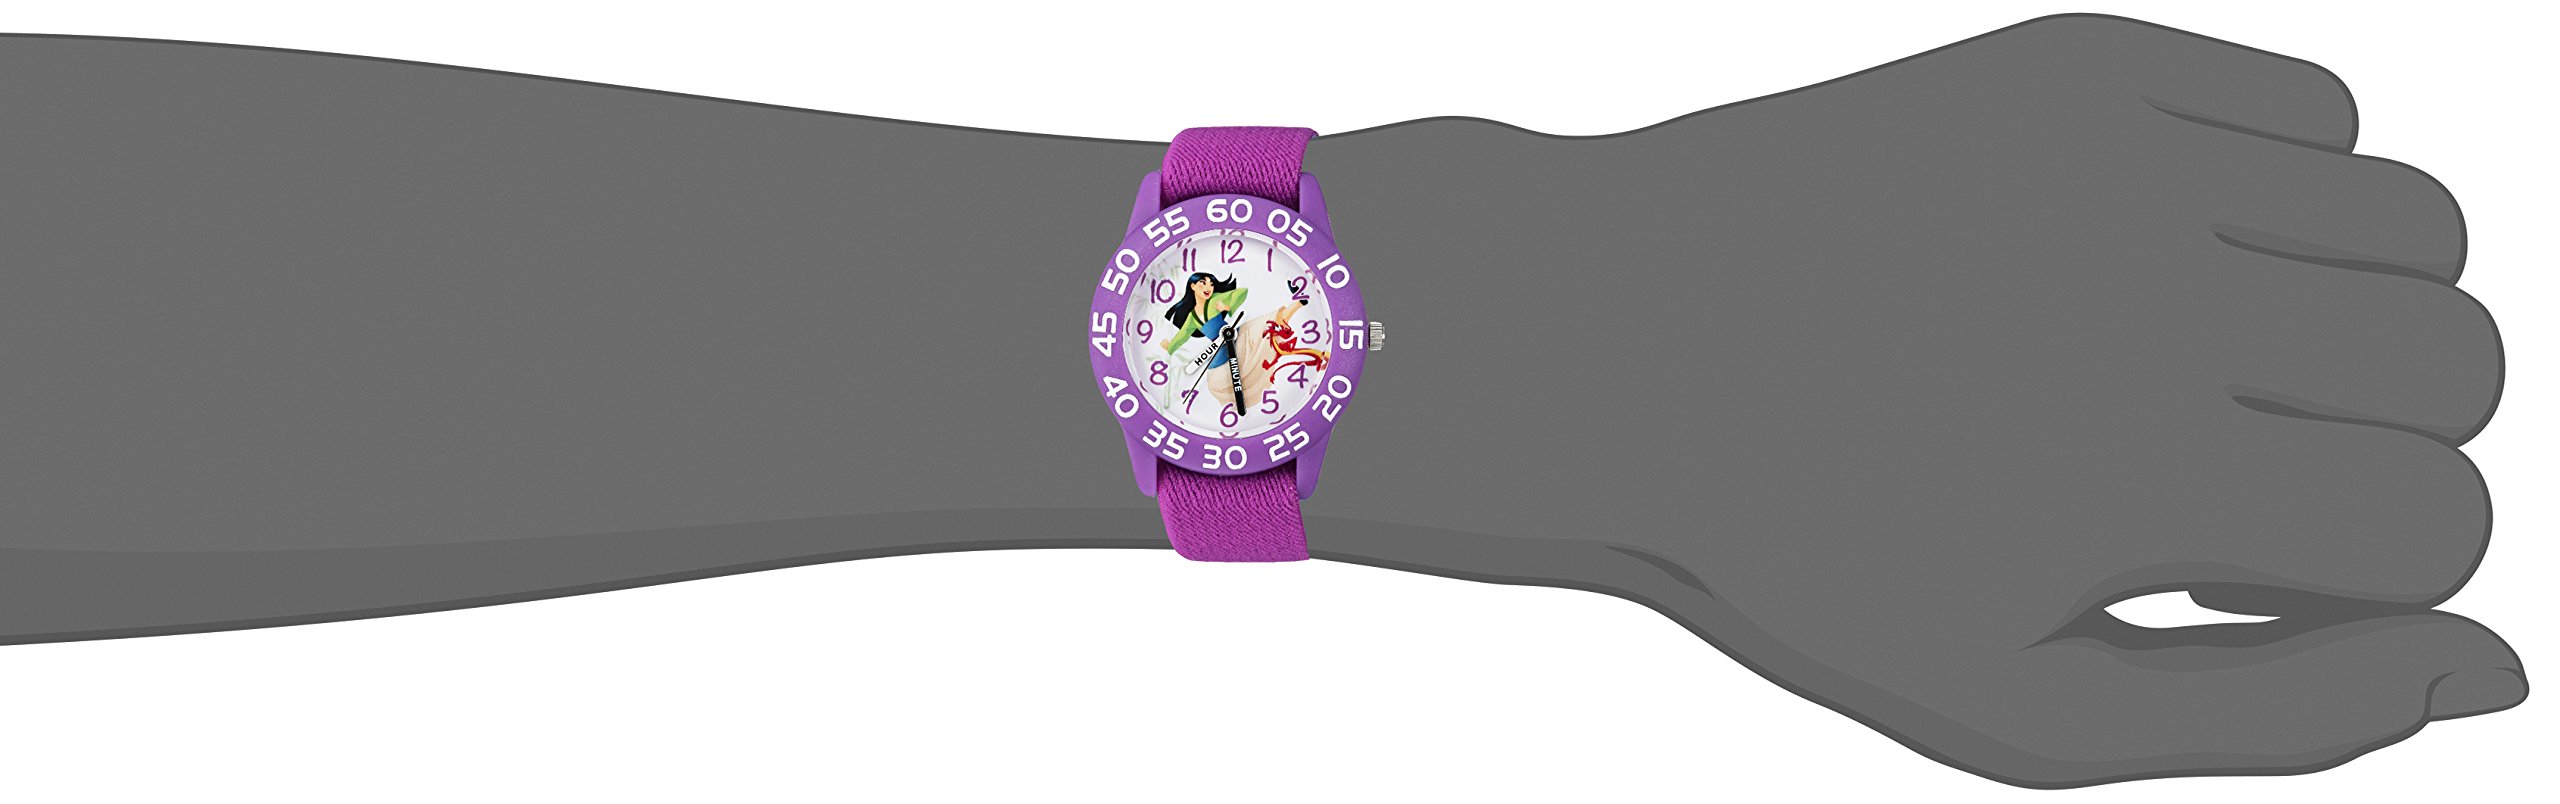 Disney Princess Kids' Plastic Time Teacher Analog Quartz Nylon Strap Watch